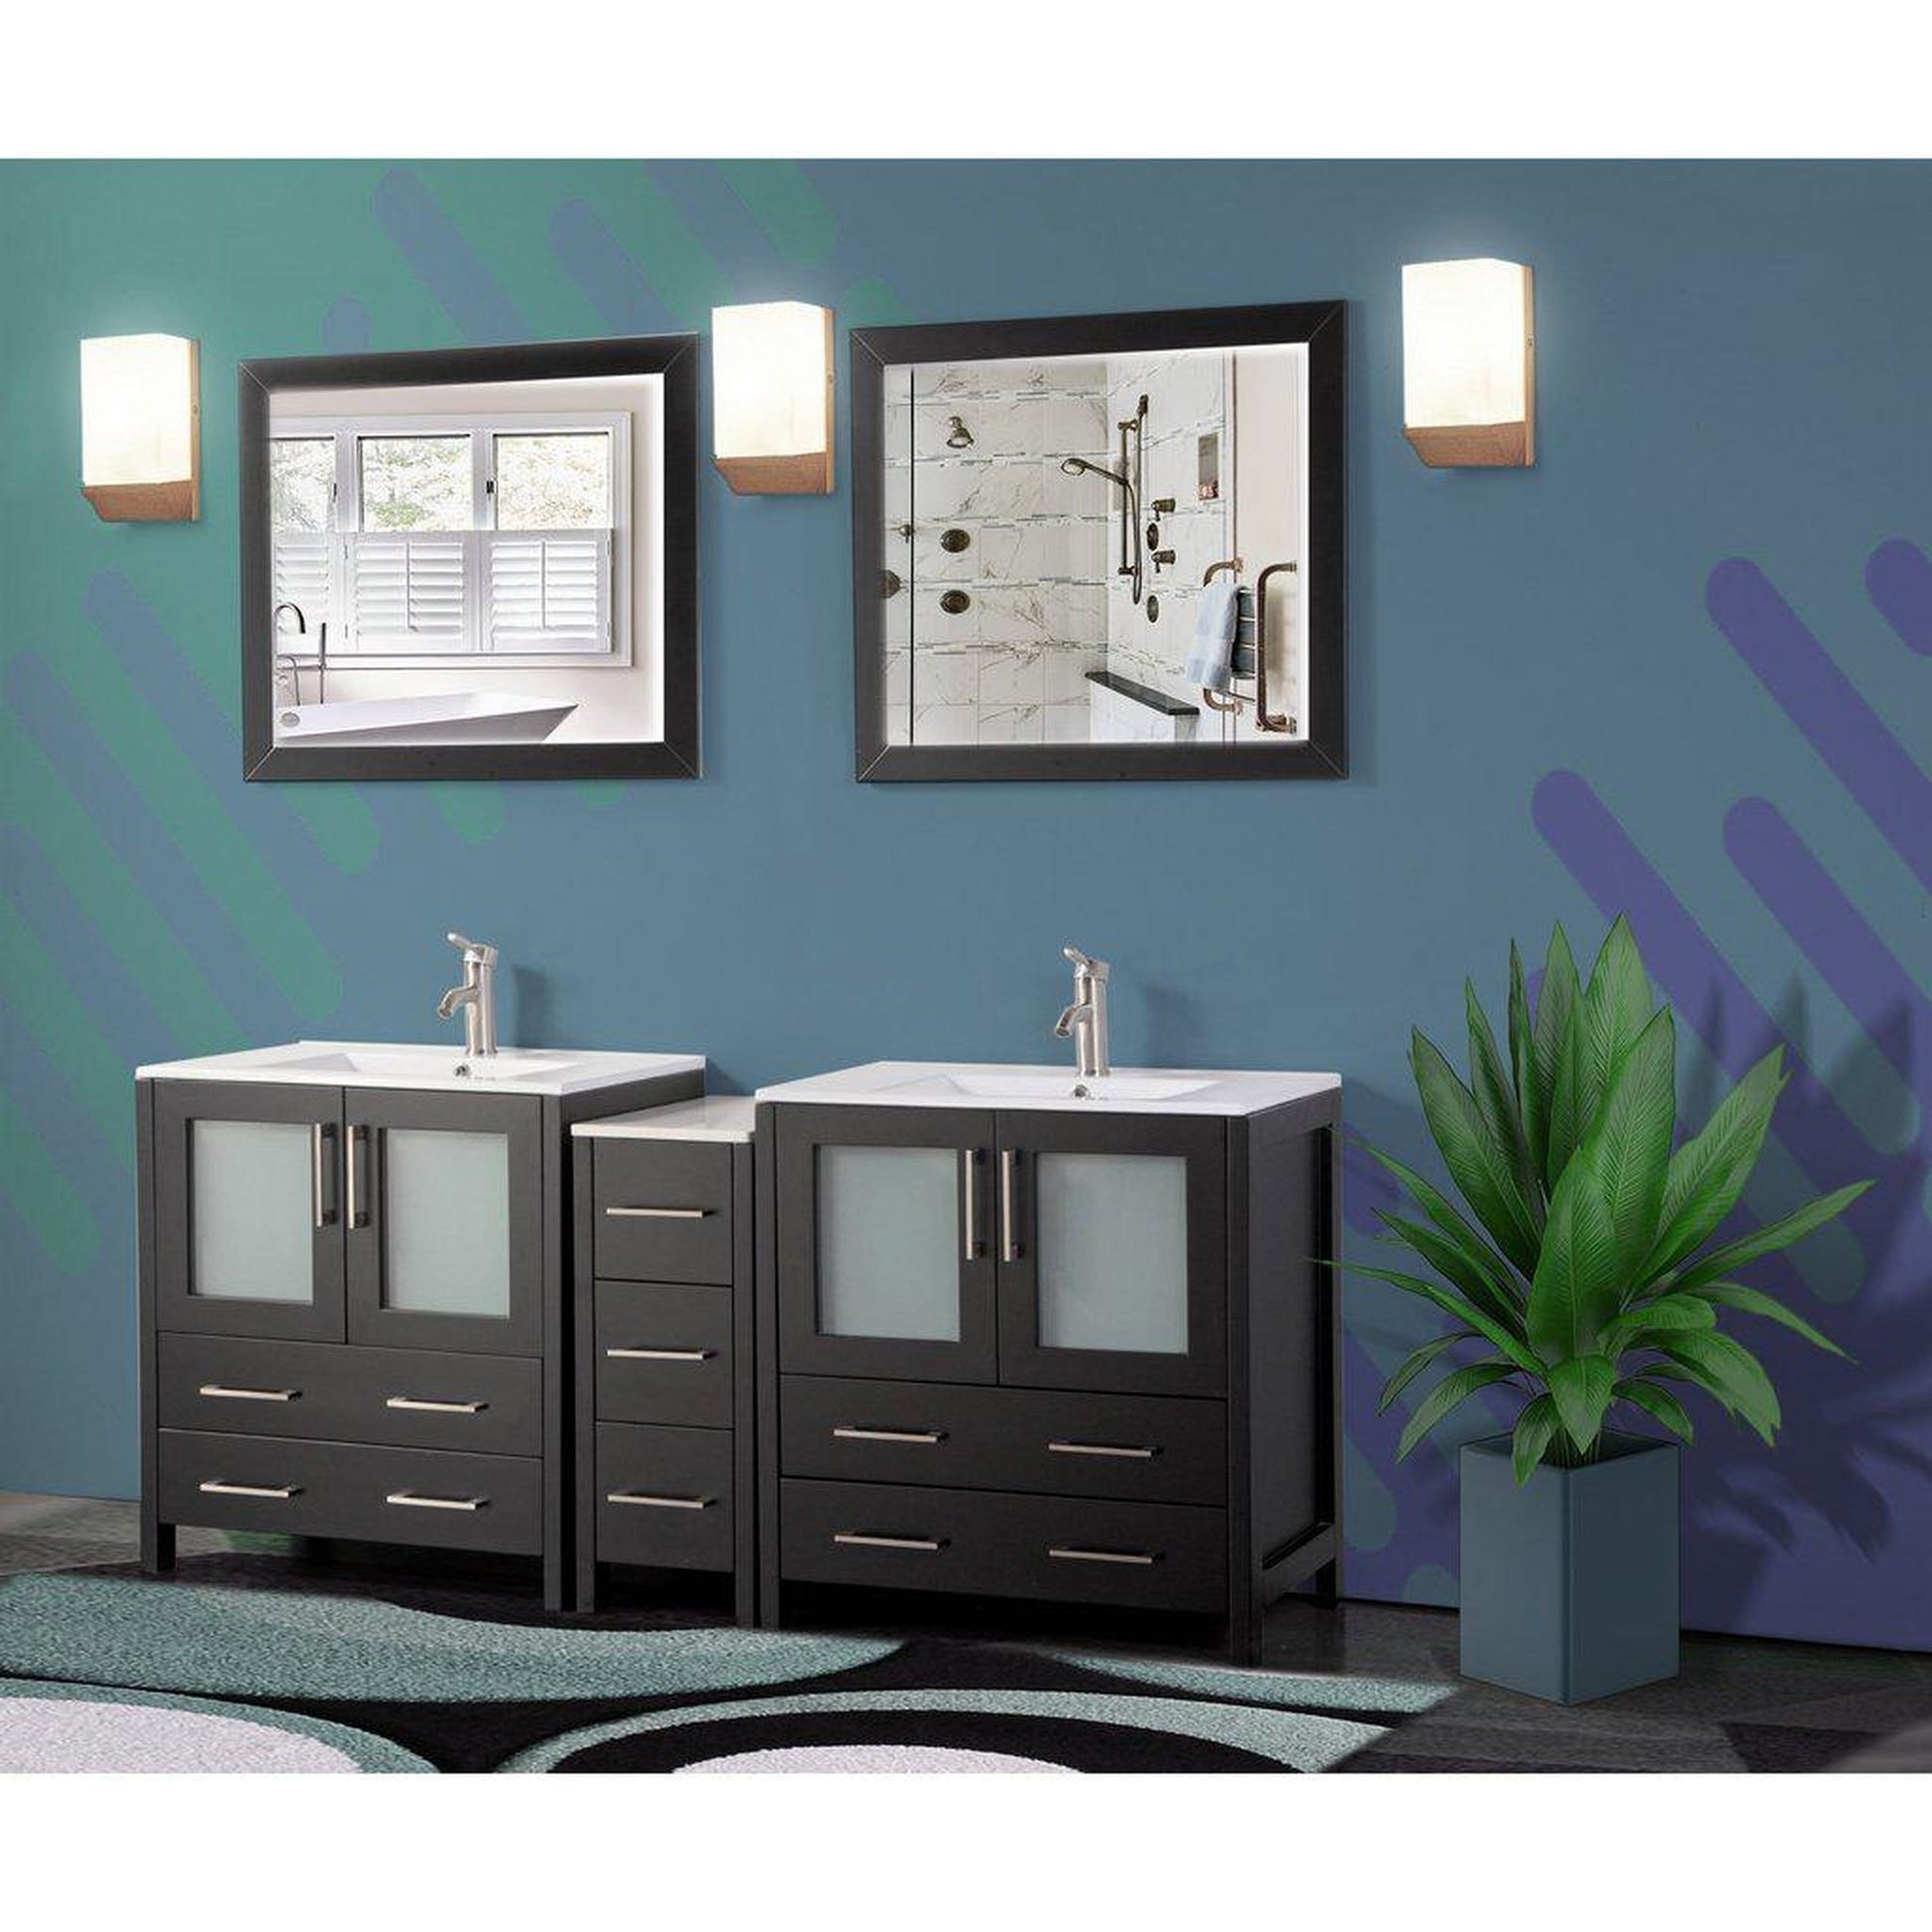 30 Bathroom Vanity with Single Sink,Modern Bathroom Storge Cabinet with  Door and Open Shelves,Freestanding Bathroom Sink Vanity Combo,Metal  Frame,Easy Assemble,Black